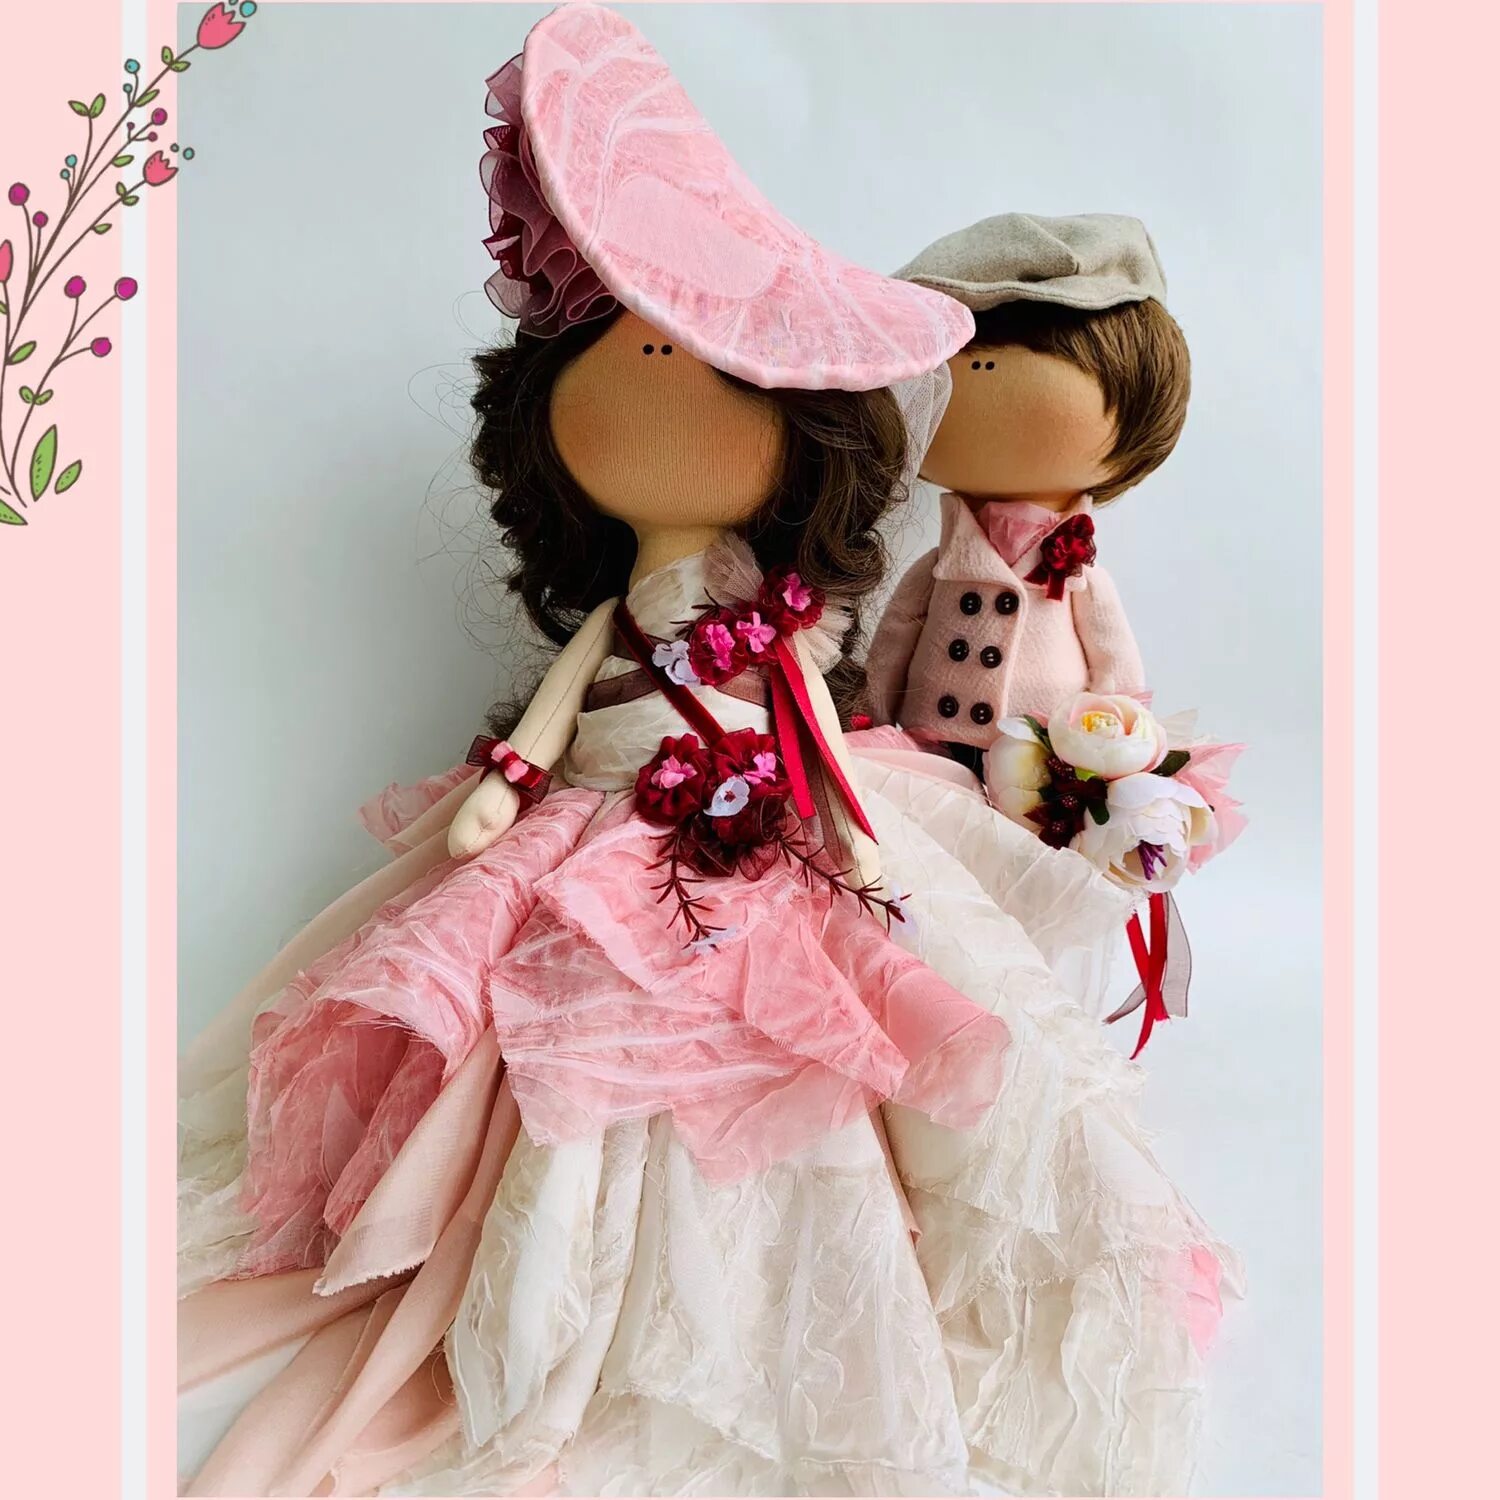 Купить шитье куклы. Интерьерная кукла. Куклы текстильные интерьерные. Тряпичная интерьерная кукла. Текстильная кукла в интерьере.